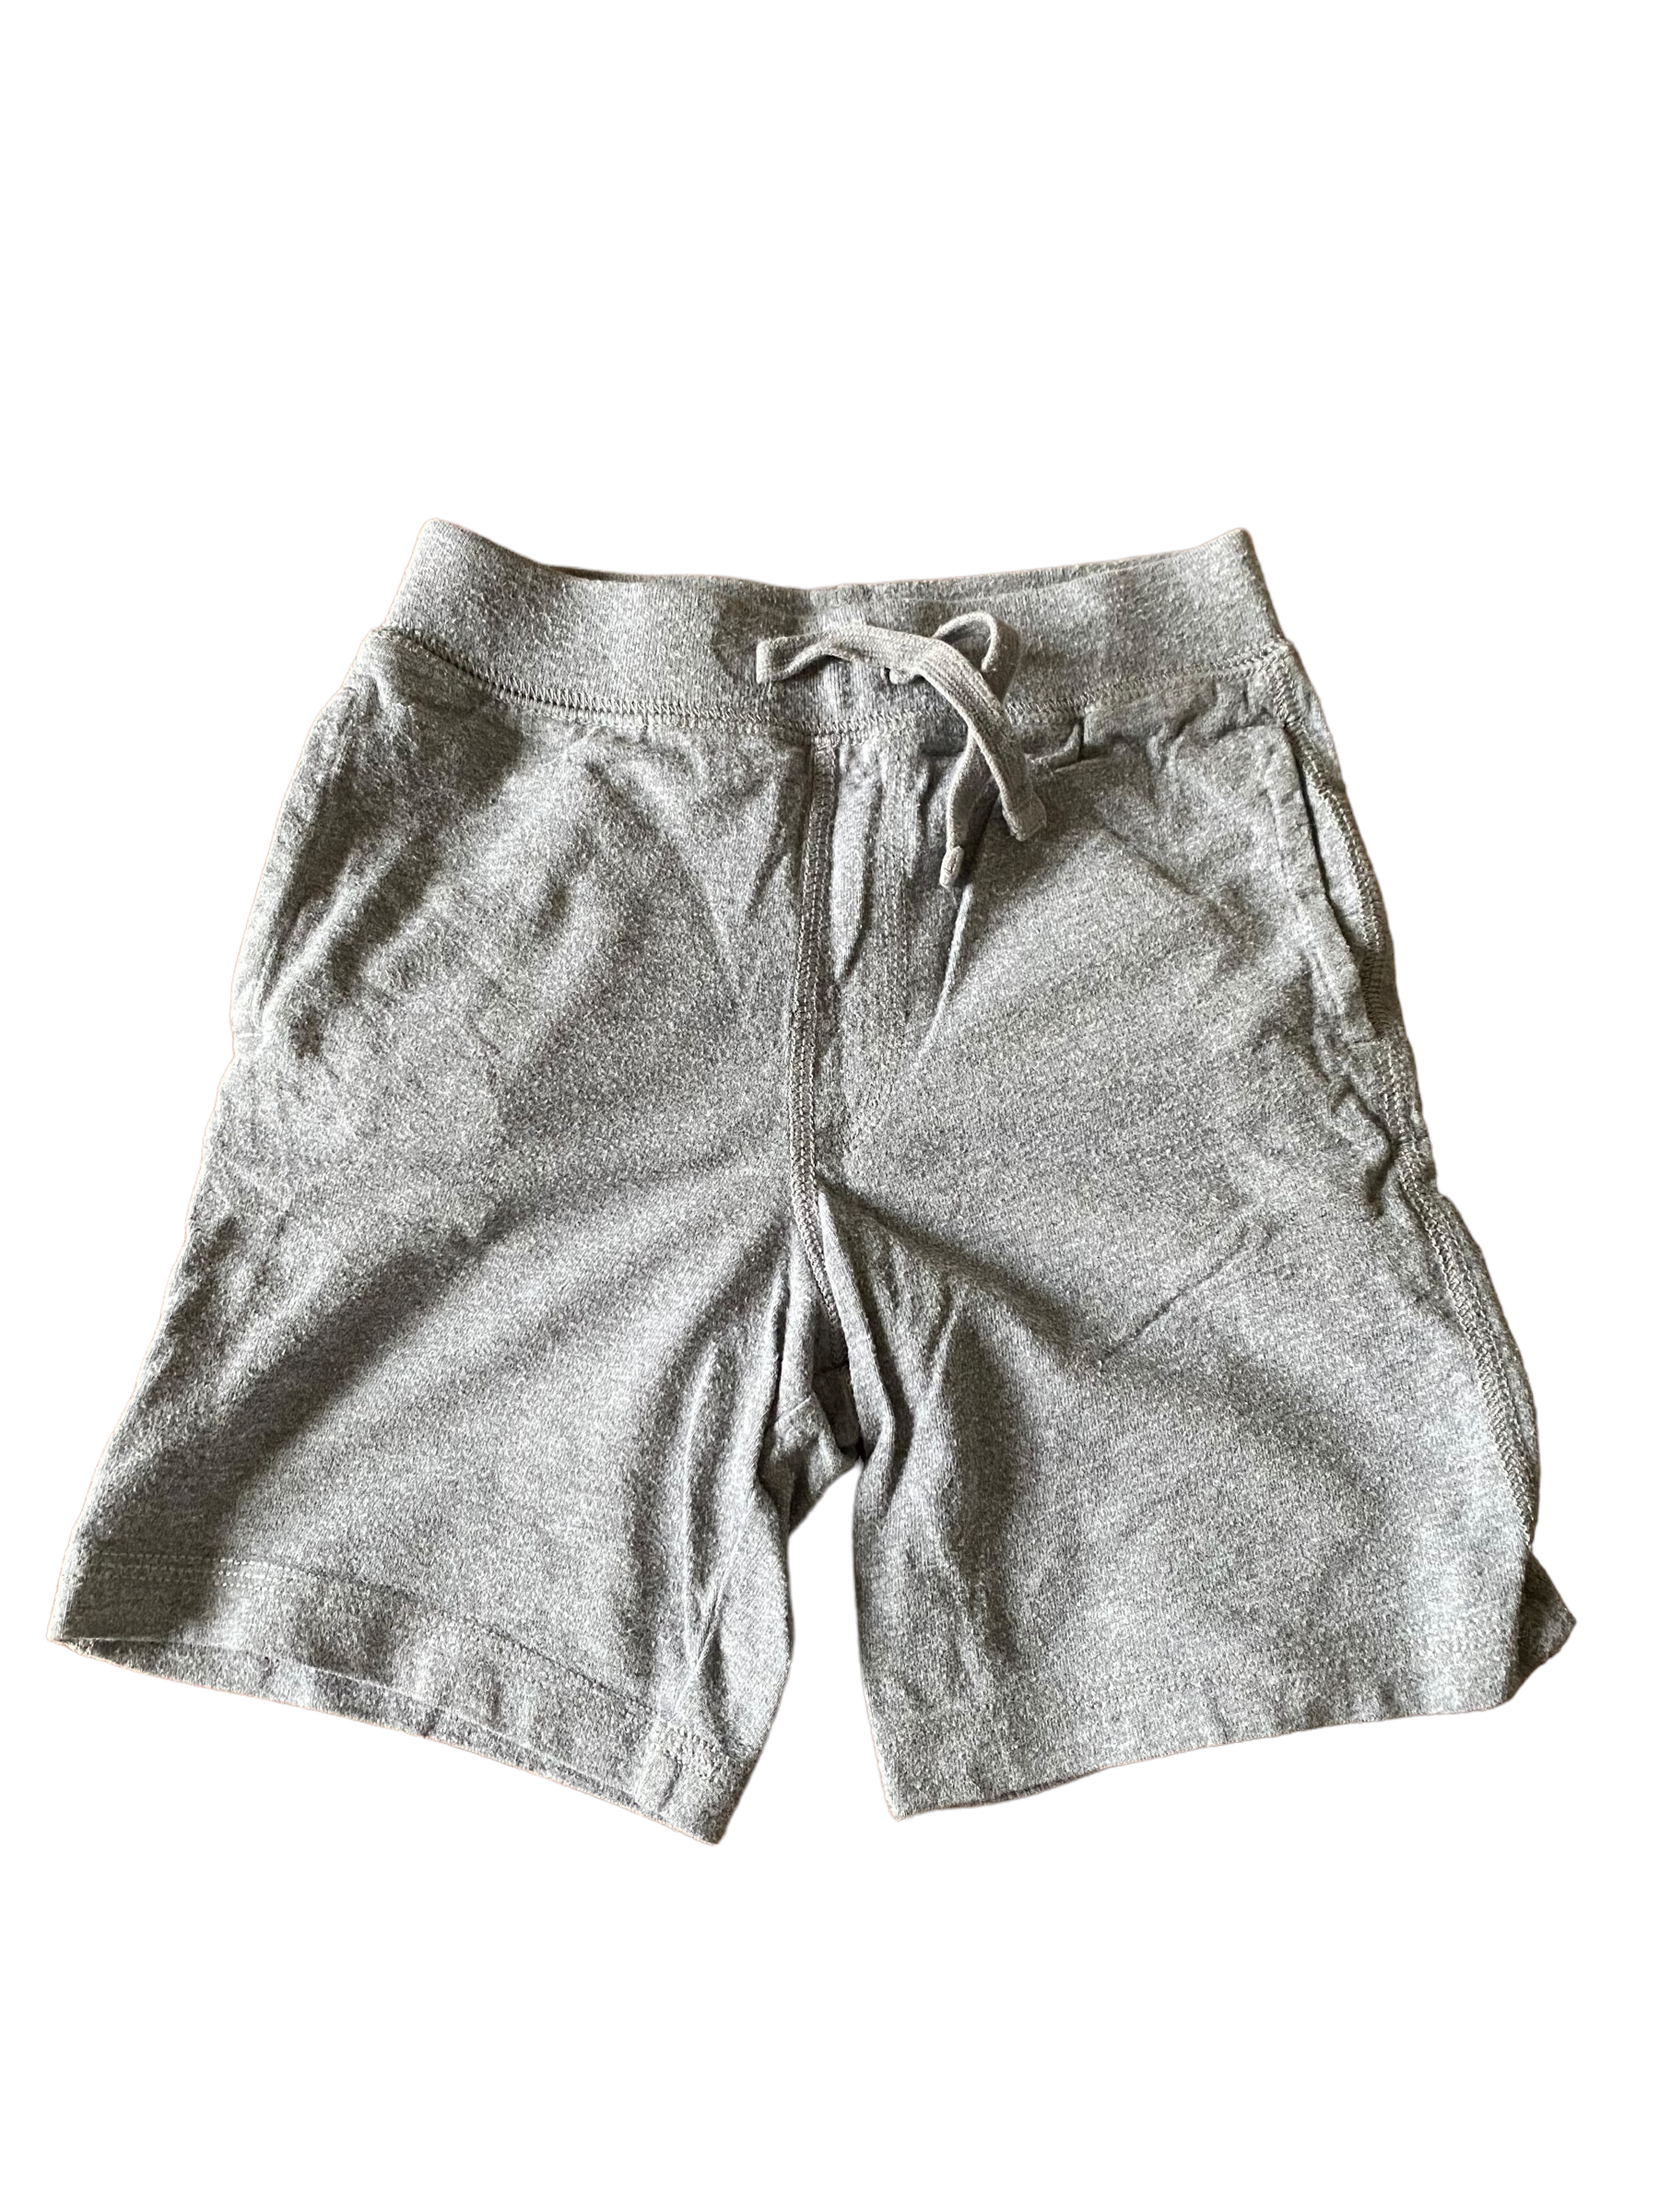 Grey jogging shorts